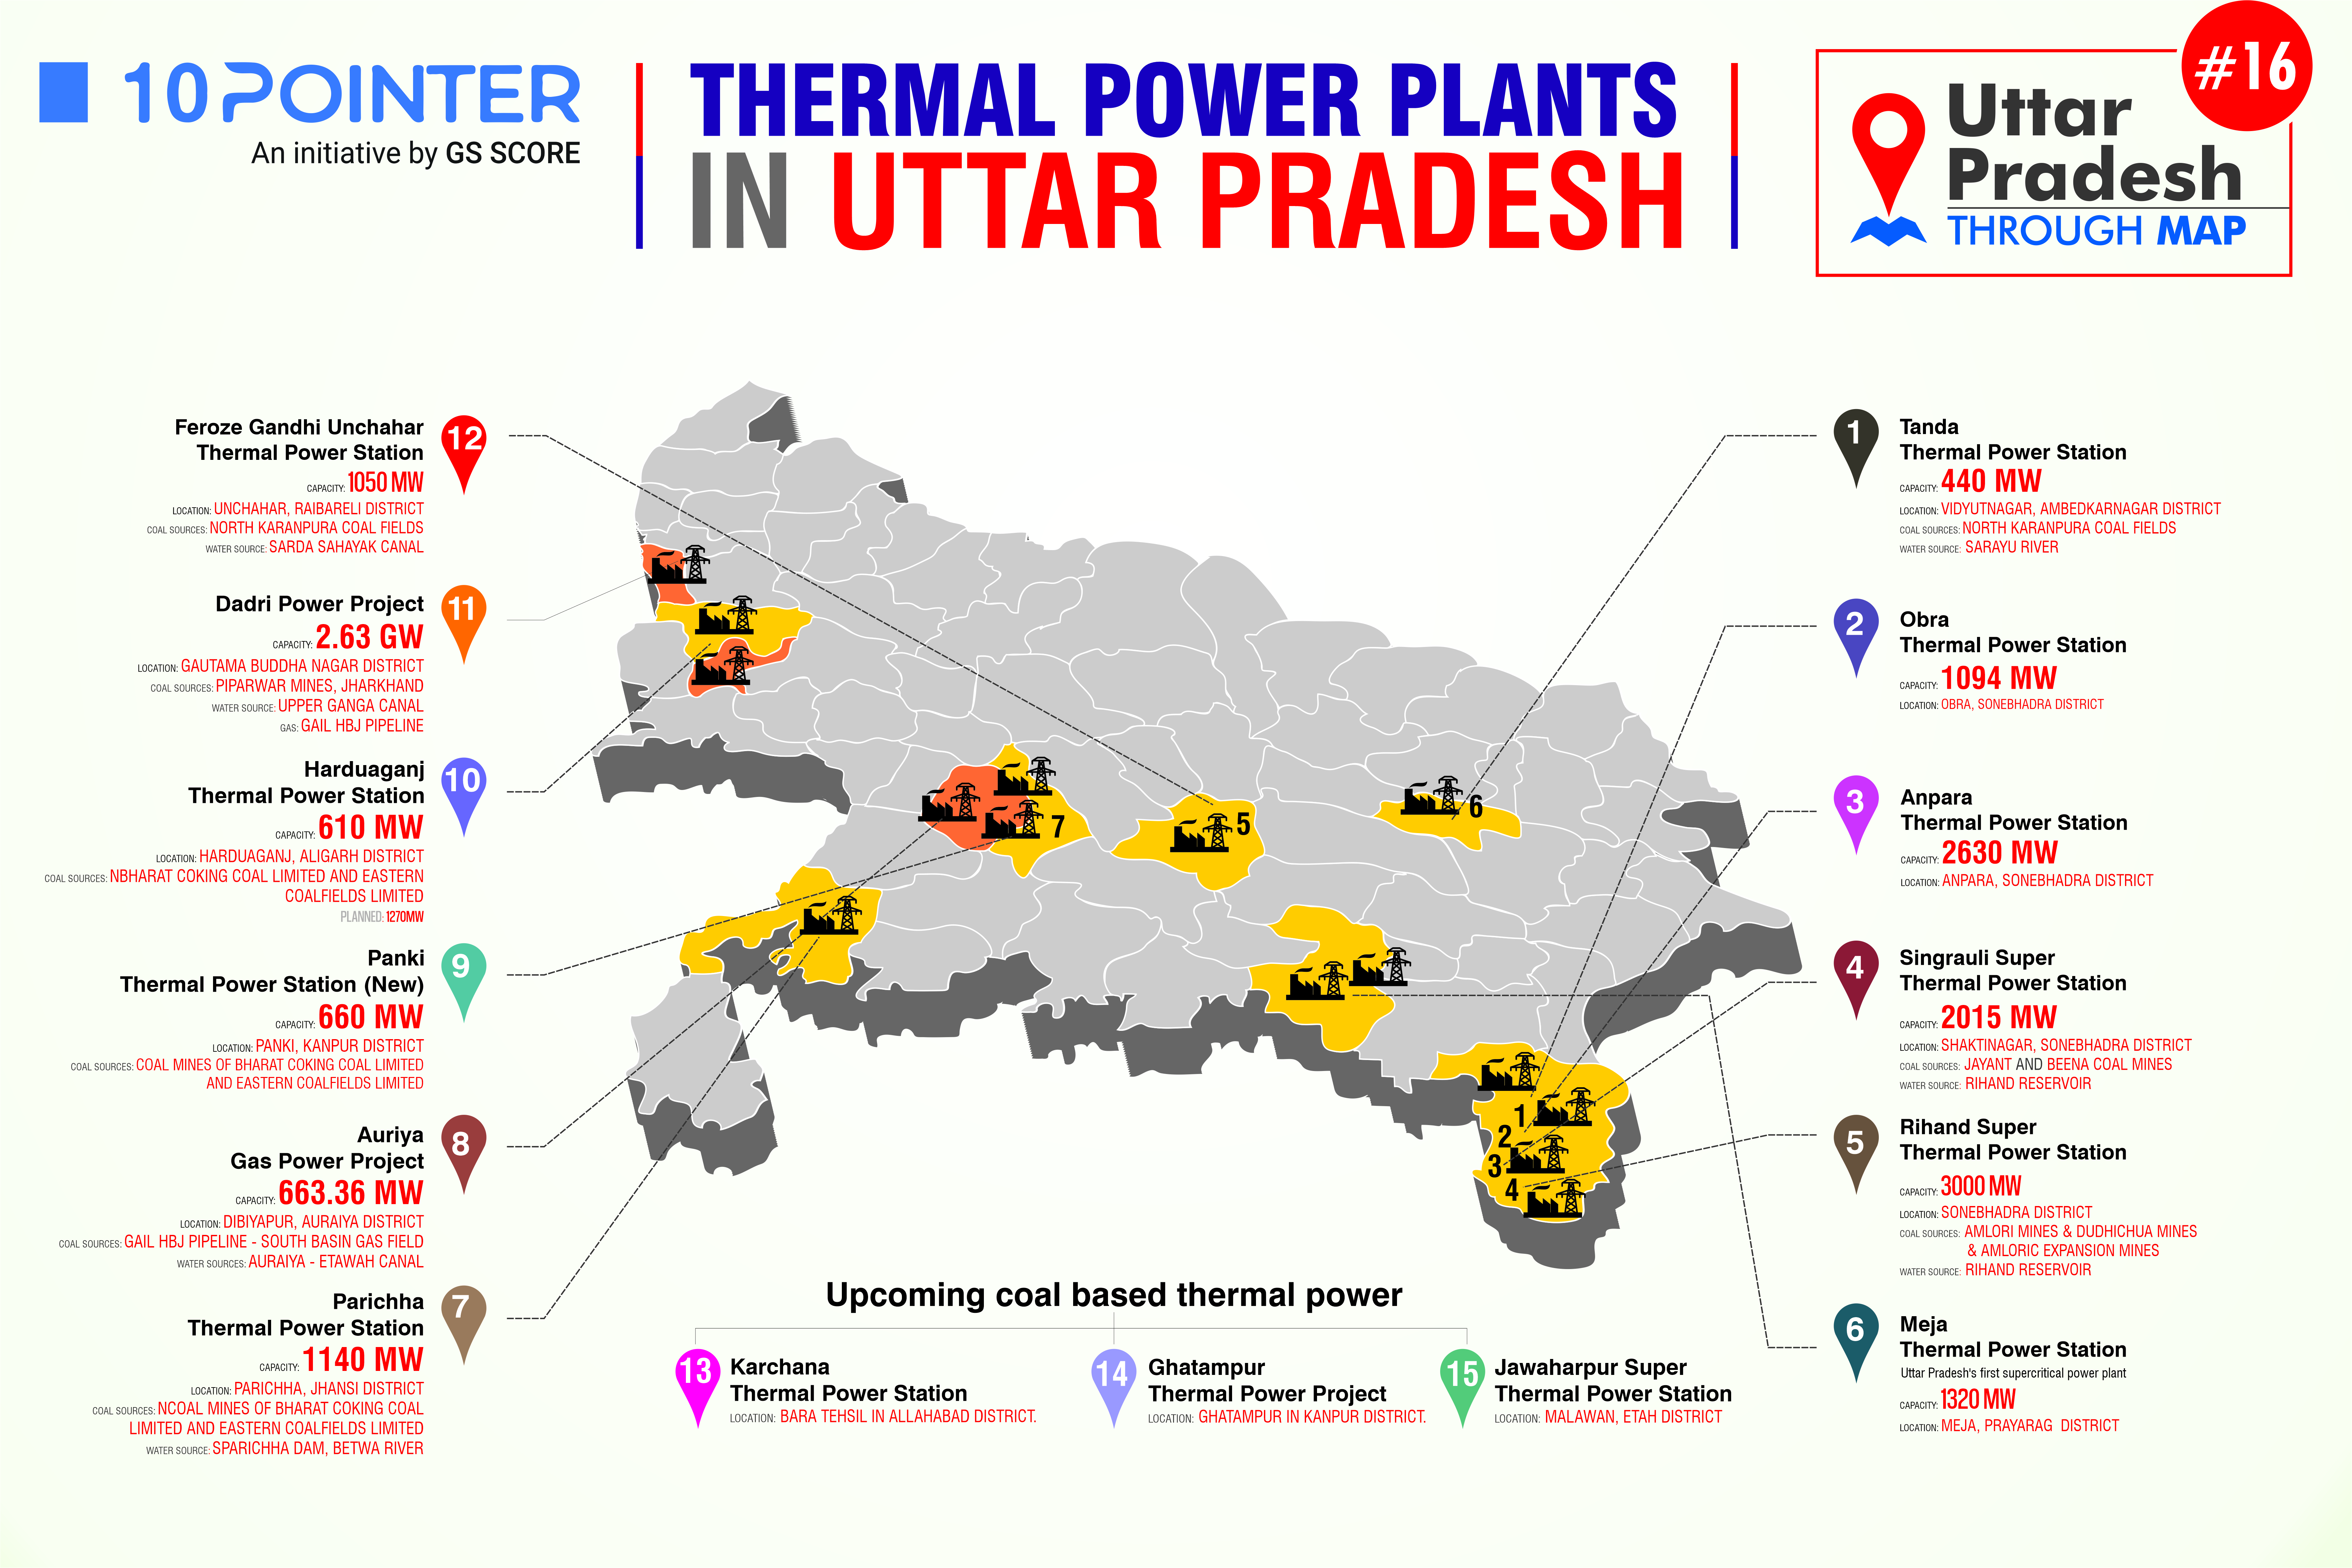 Thermal Power Plants in Utter Pradesh